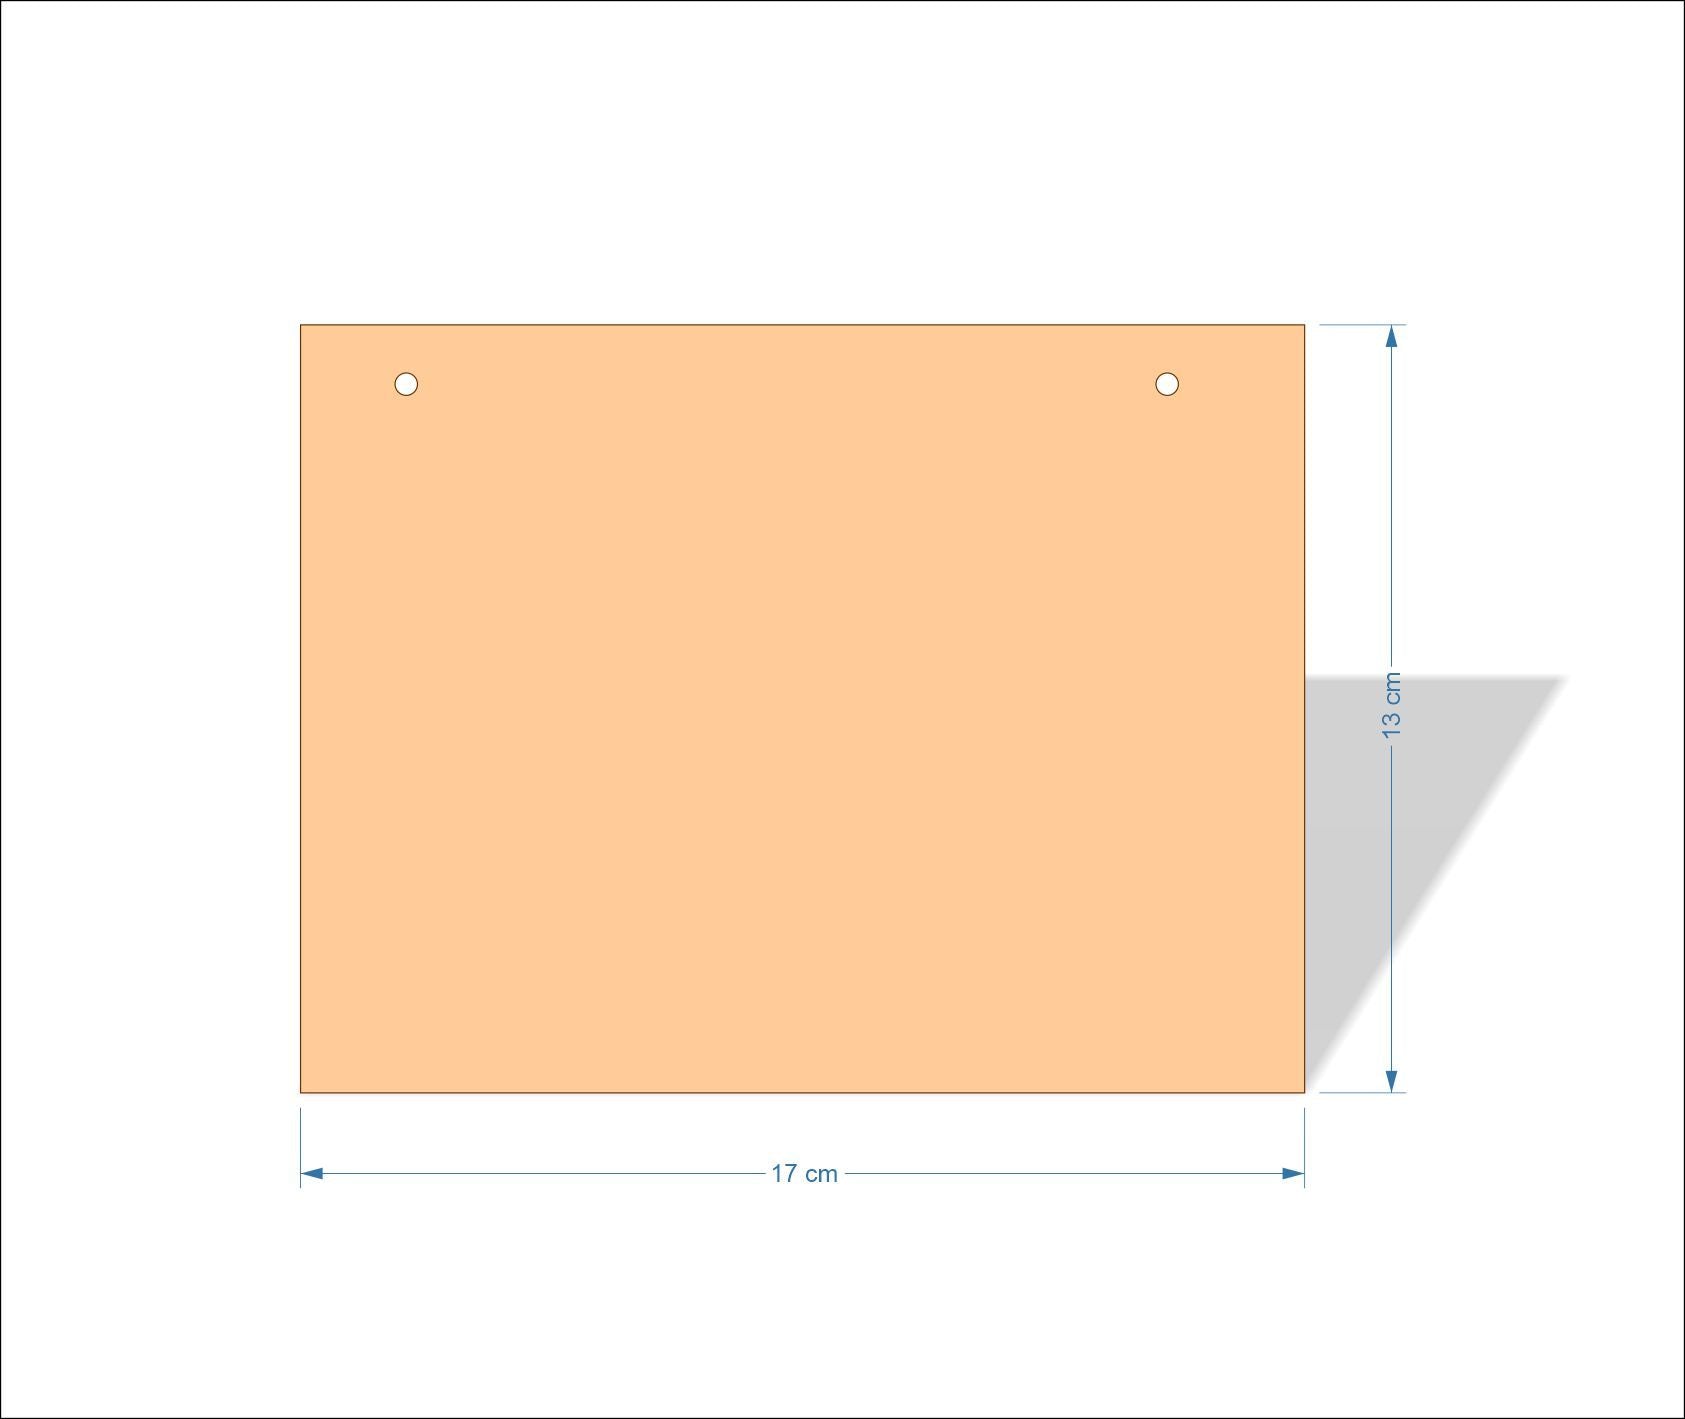 17 cm X 13 cm 3mm MDF Plaques with square corners